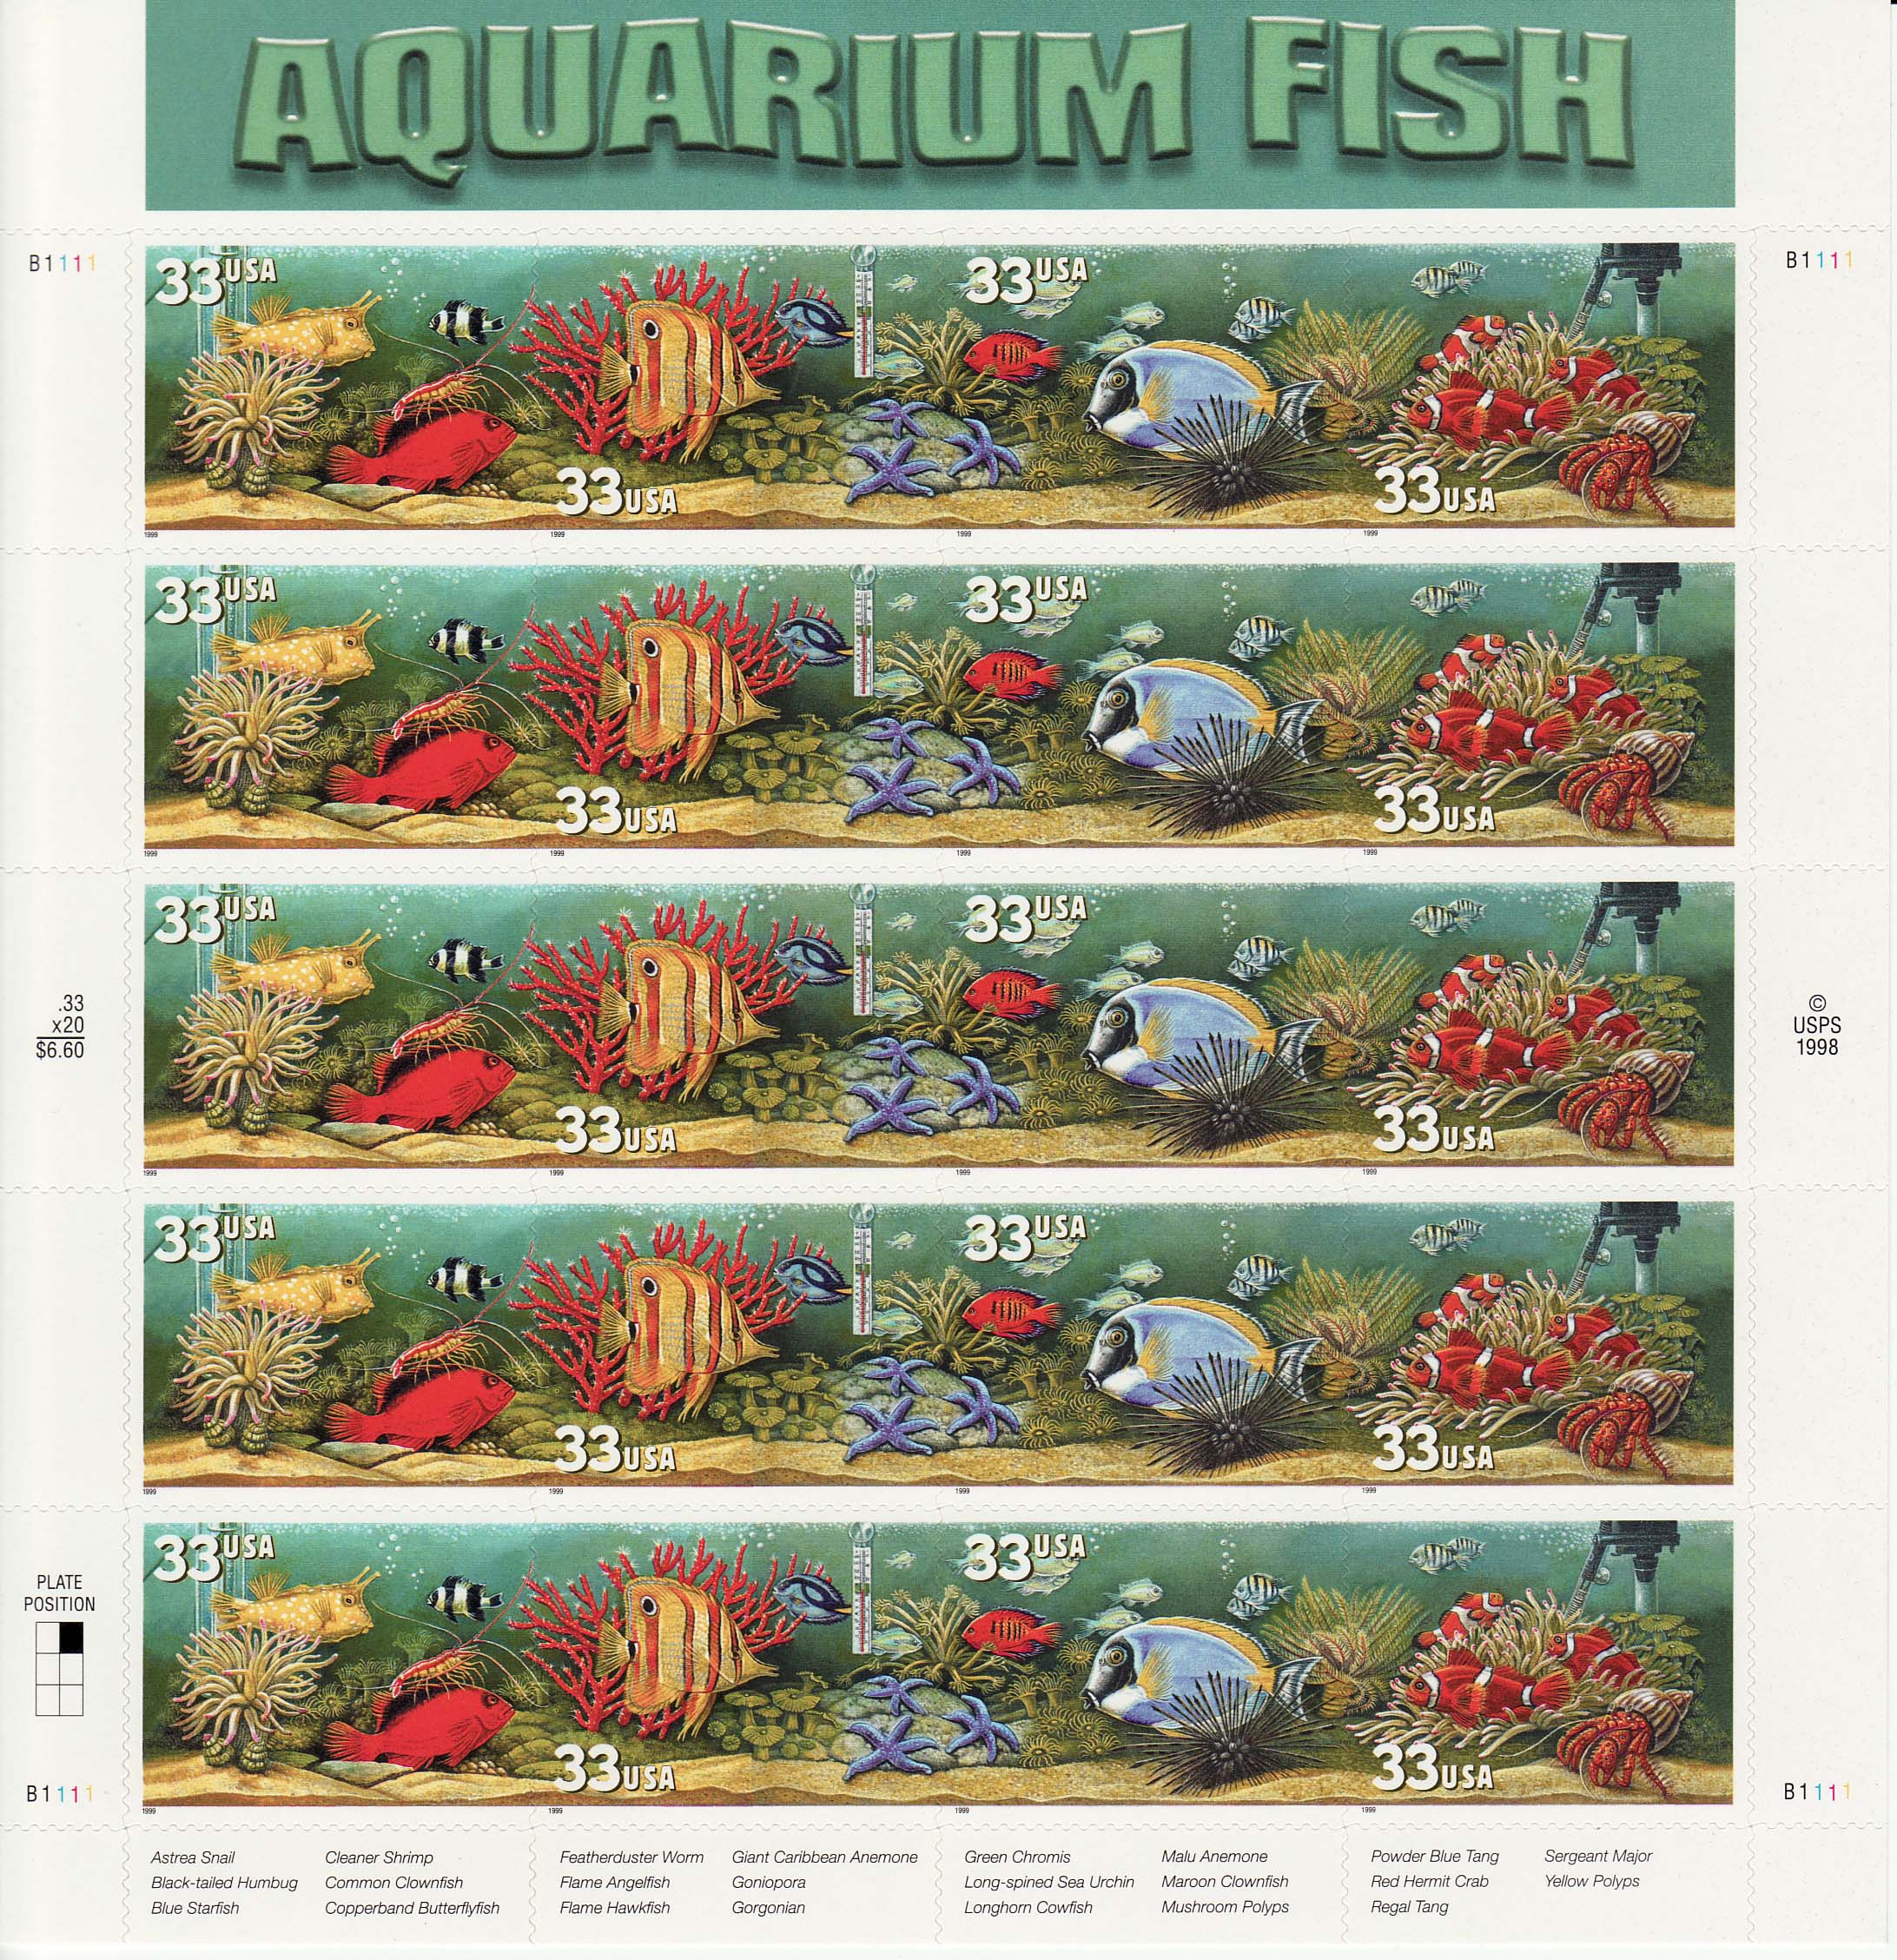 Aquarium Fish stamp sheet